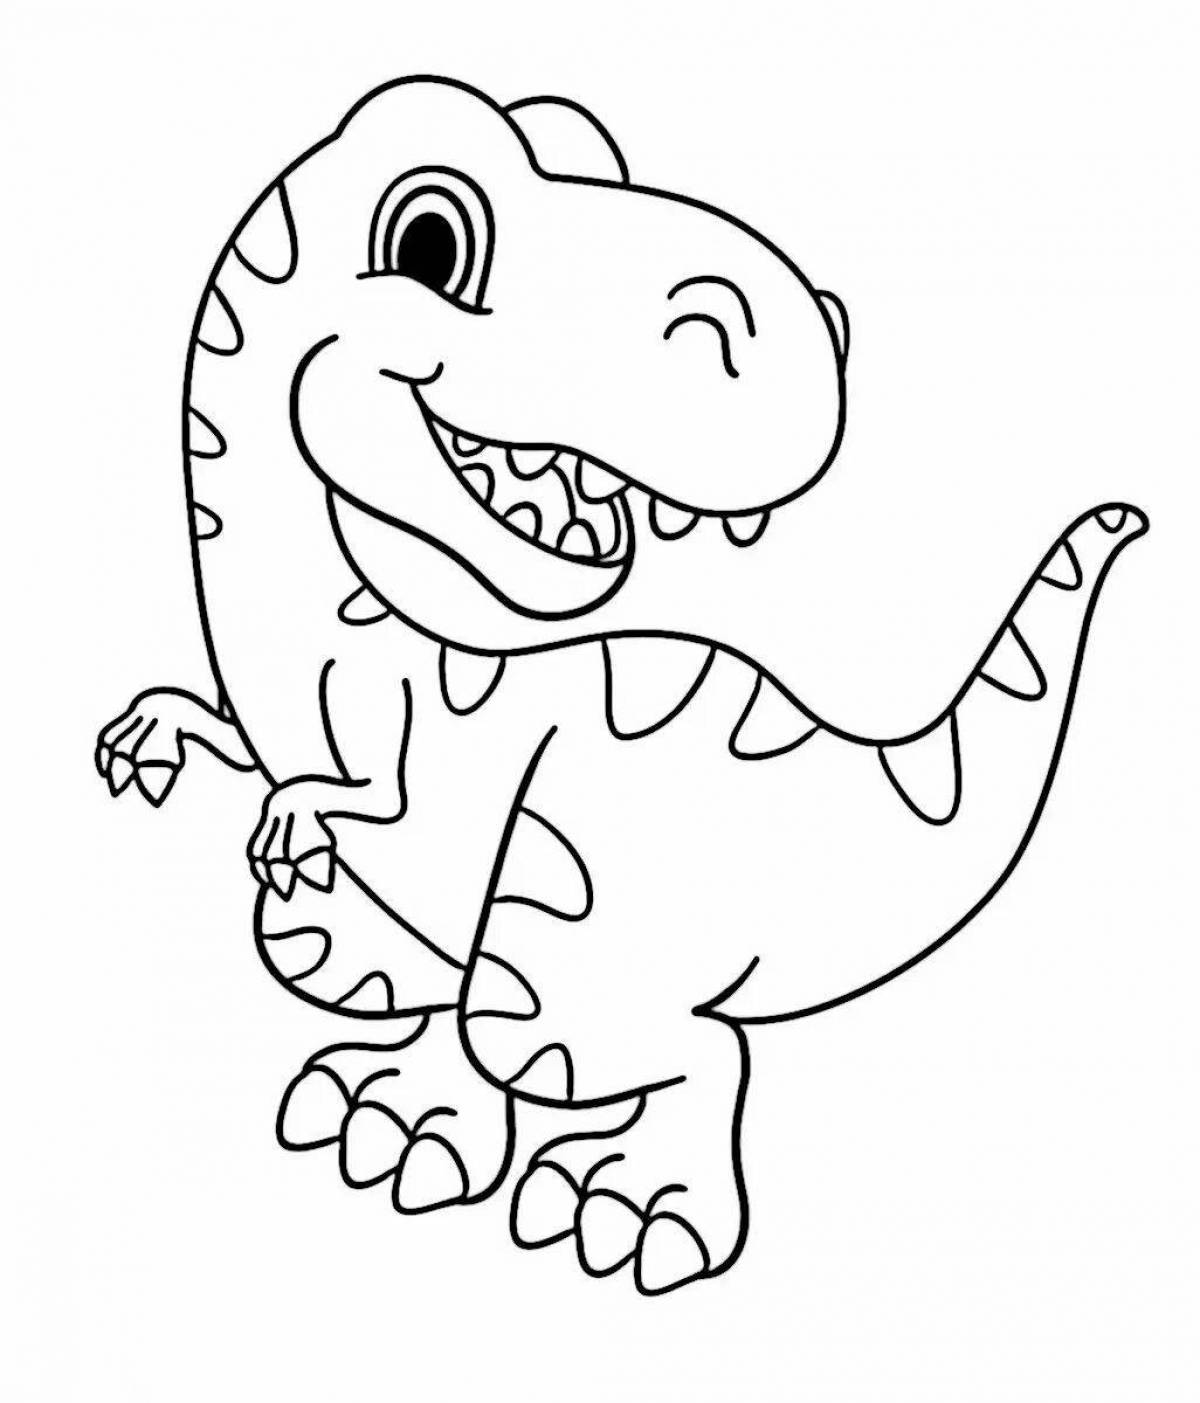 Children's rex dinosaur coloring book